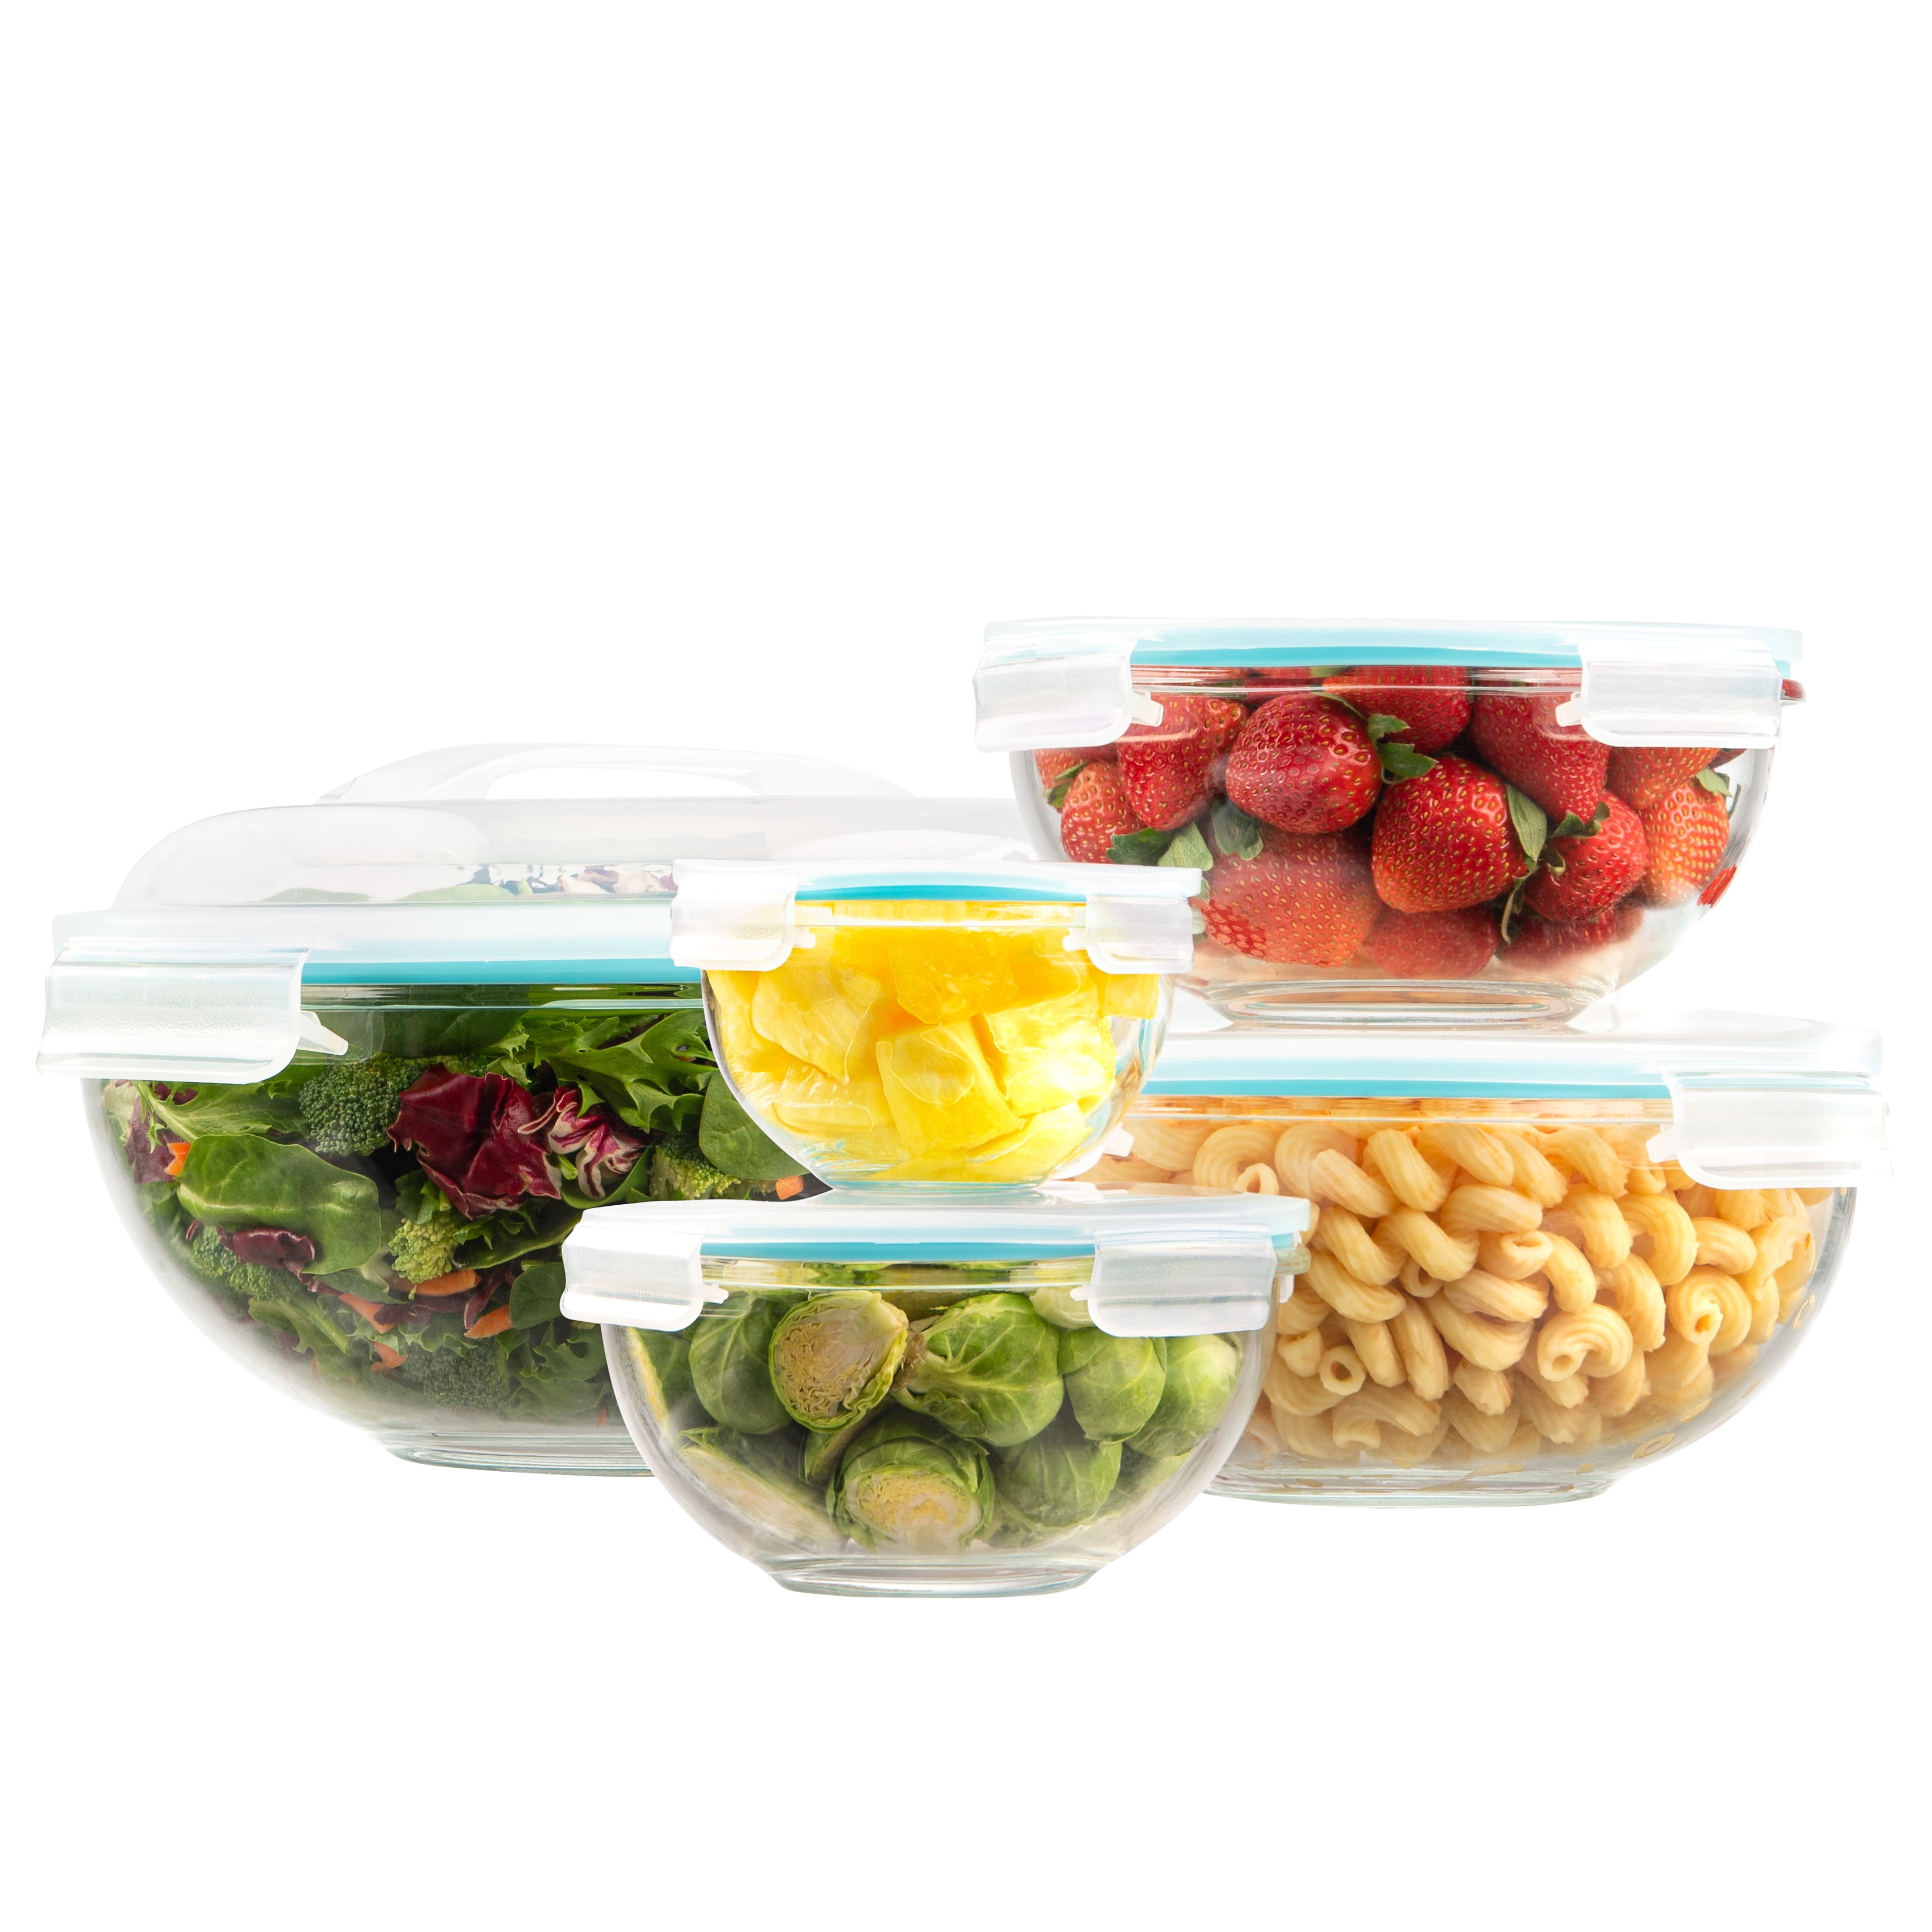 EatNeat 5-Piece Glass Salad Bowl Set With Airtight Locking Lids 